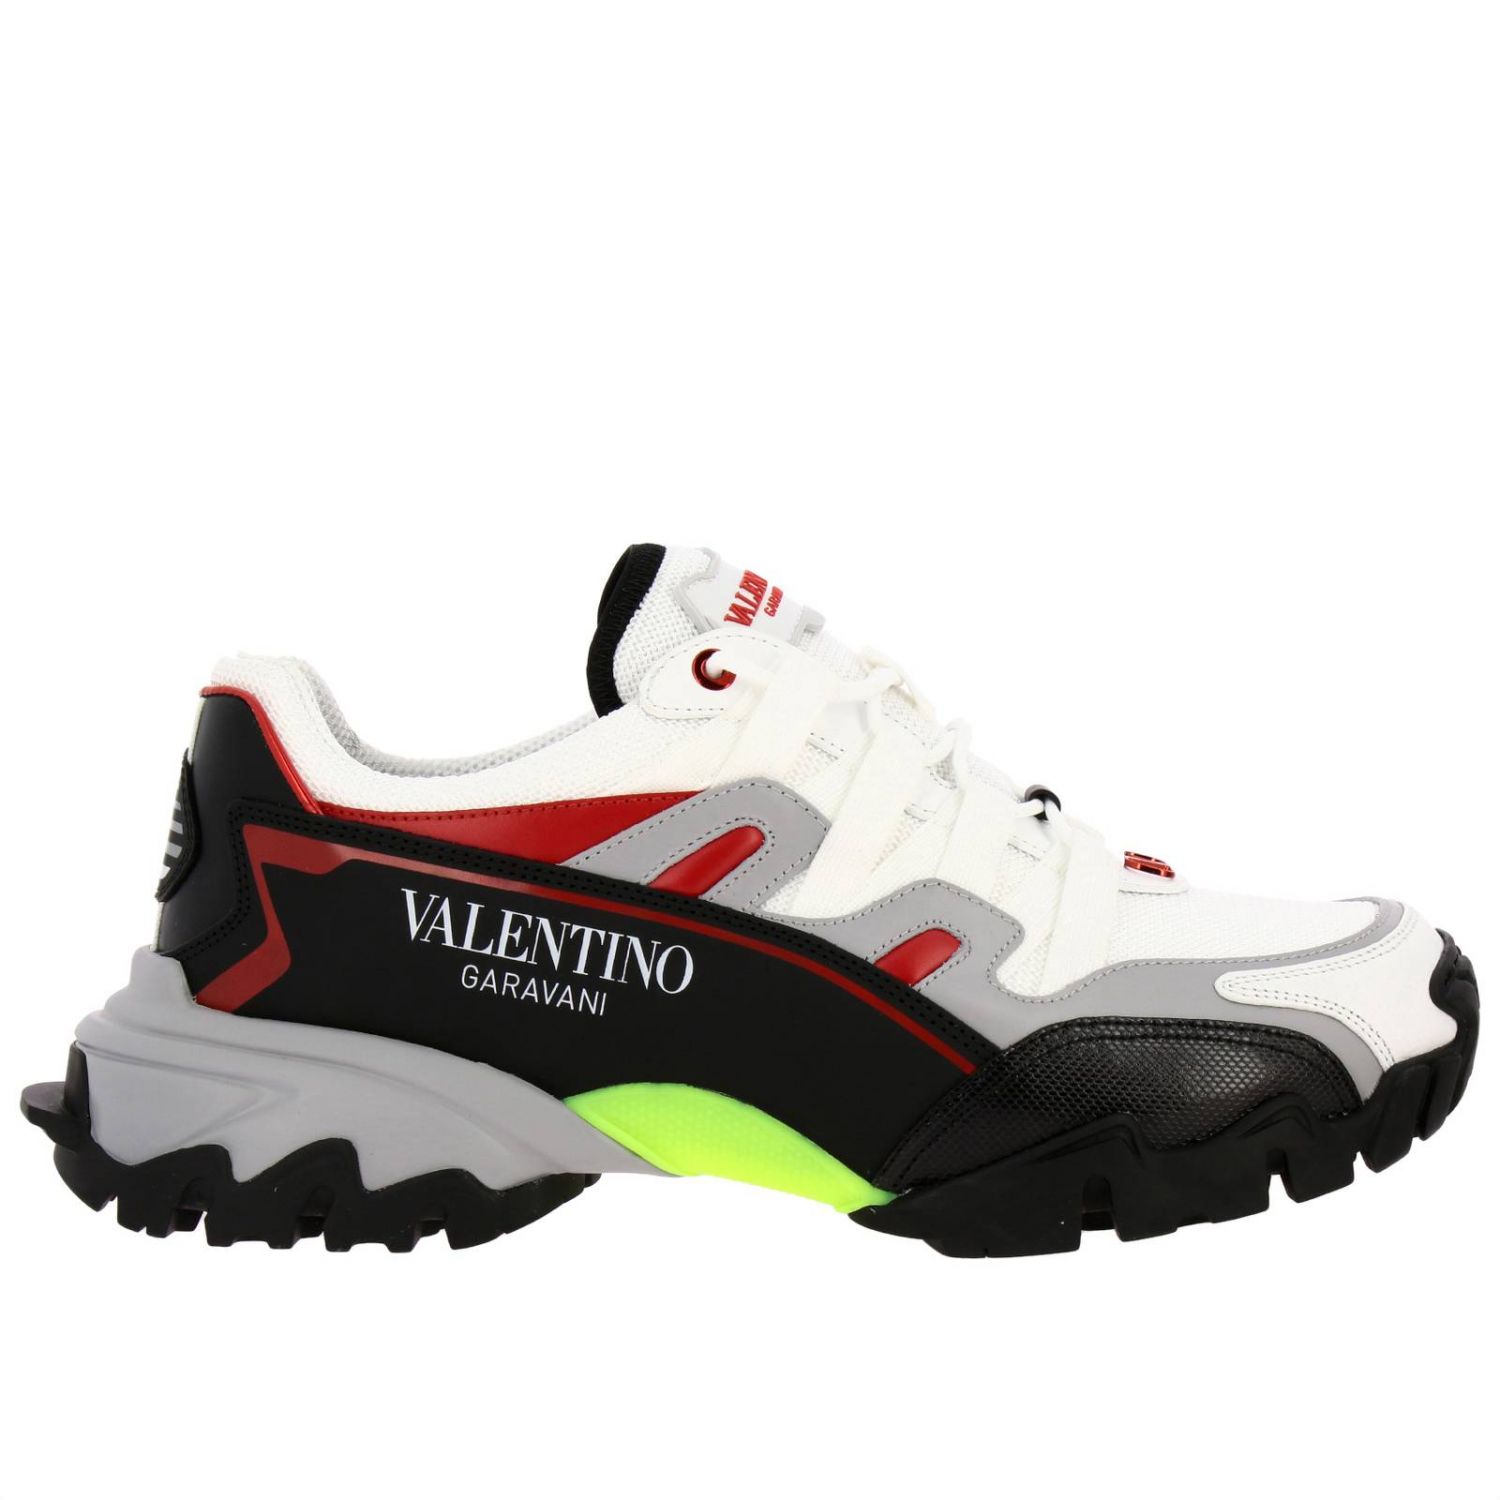 valentino sport shoes